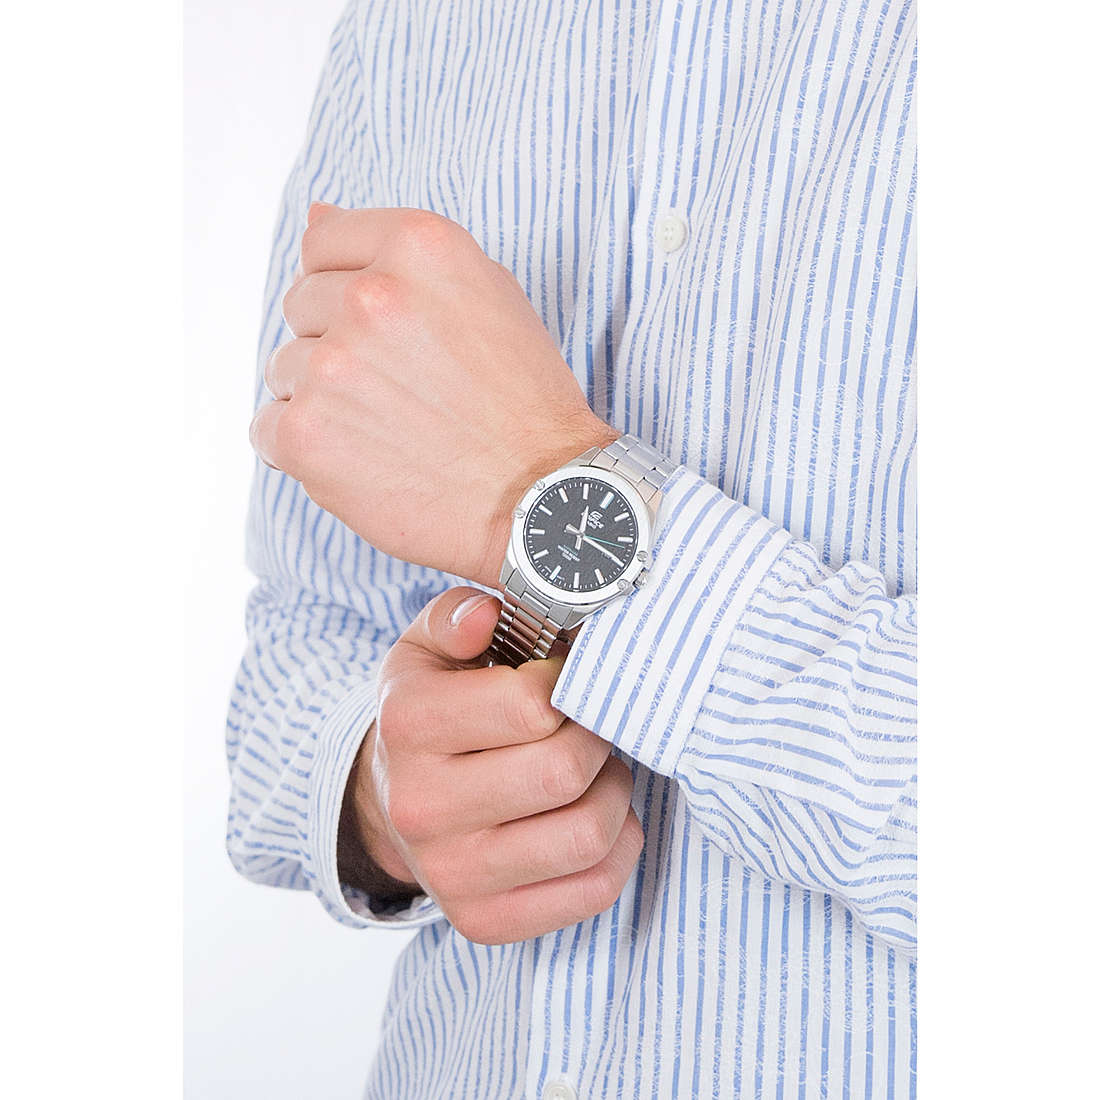 Casio chronographs Edifice man EFR-S107D-1AVUEF wearing